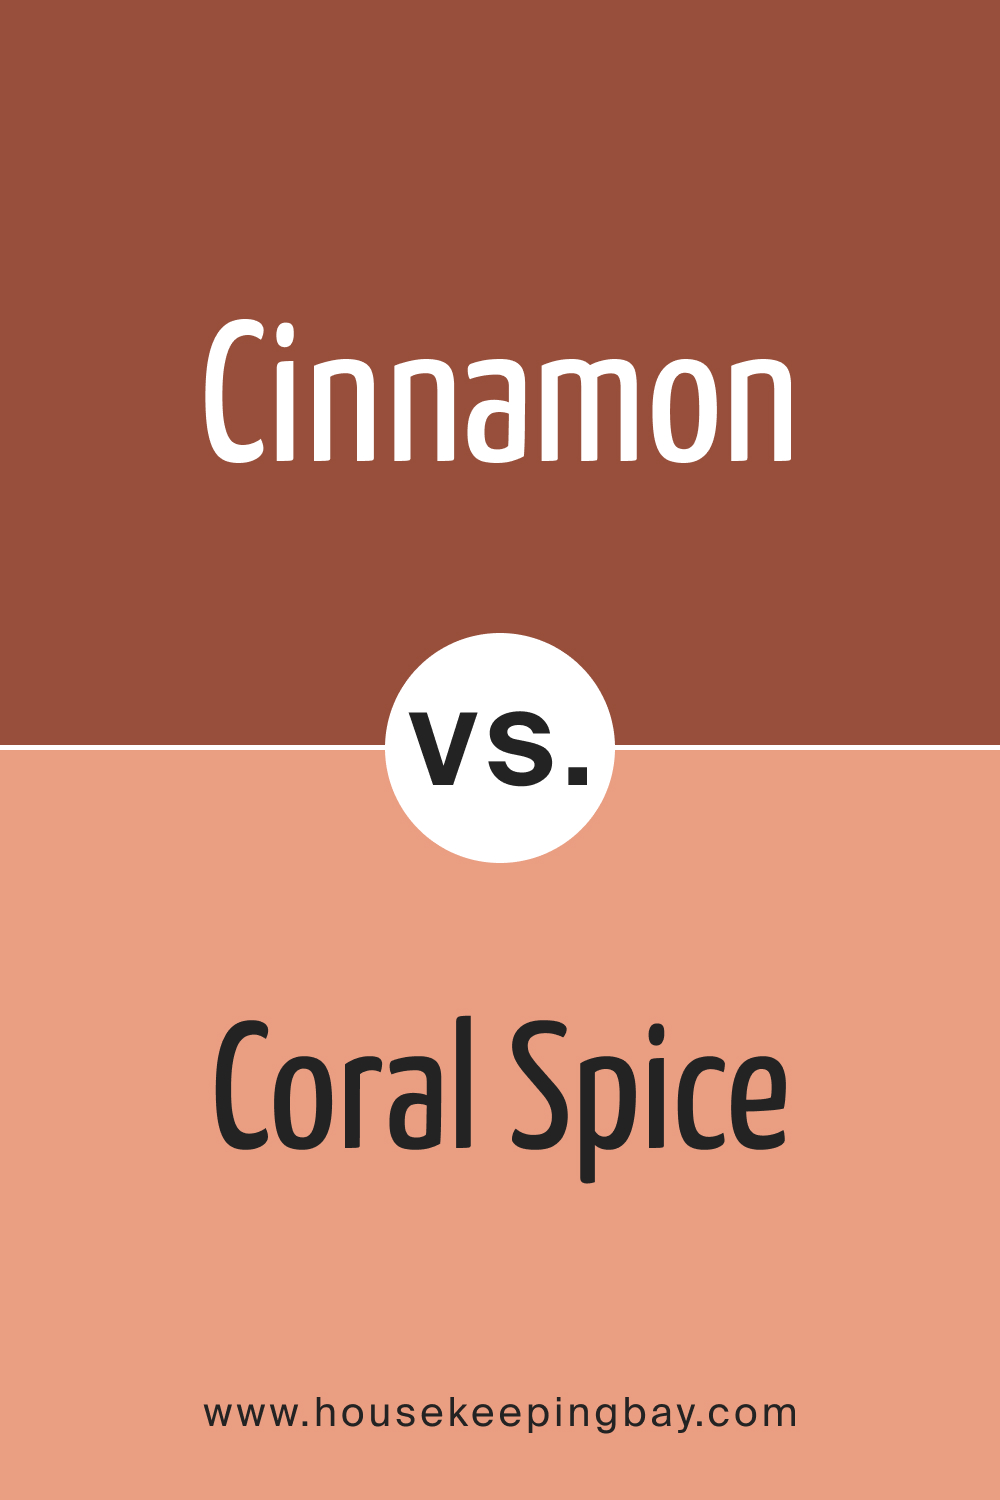 Cinnamon 2174 20 vs. BM 2170 40 Coral Spice